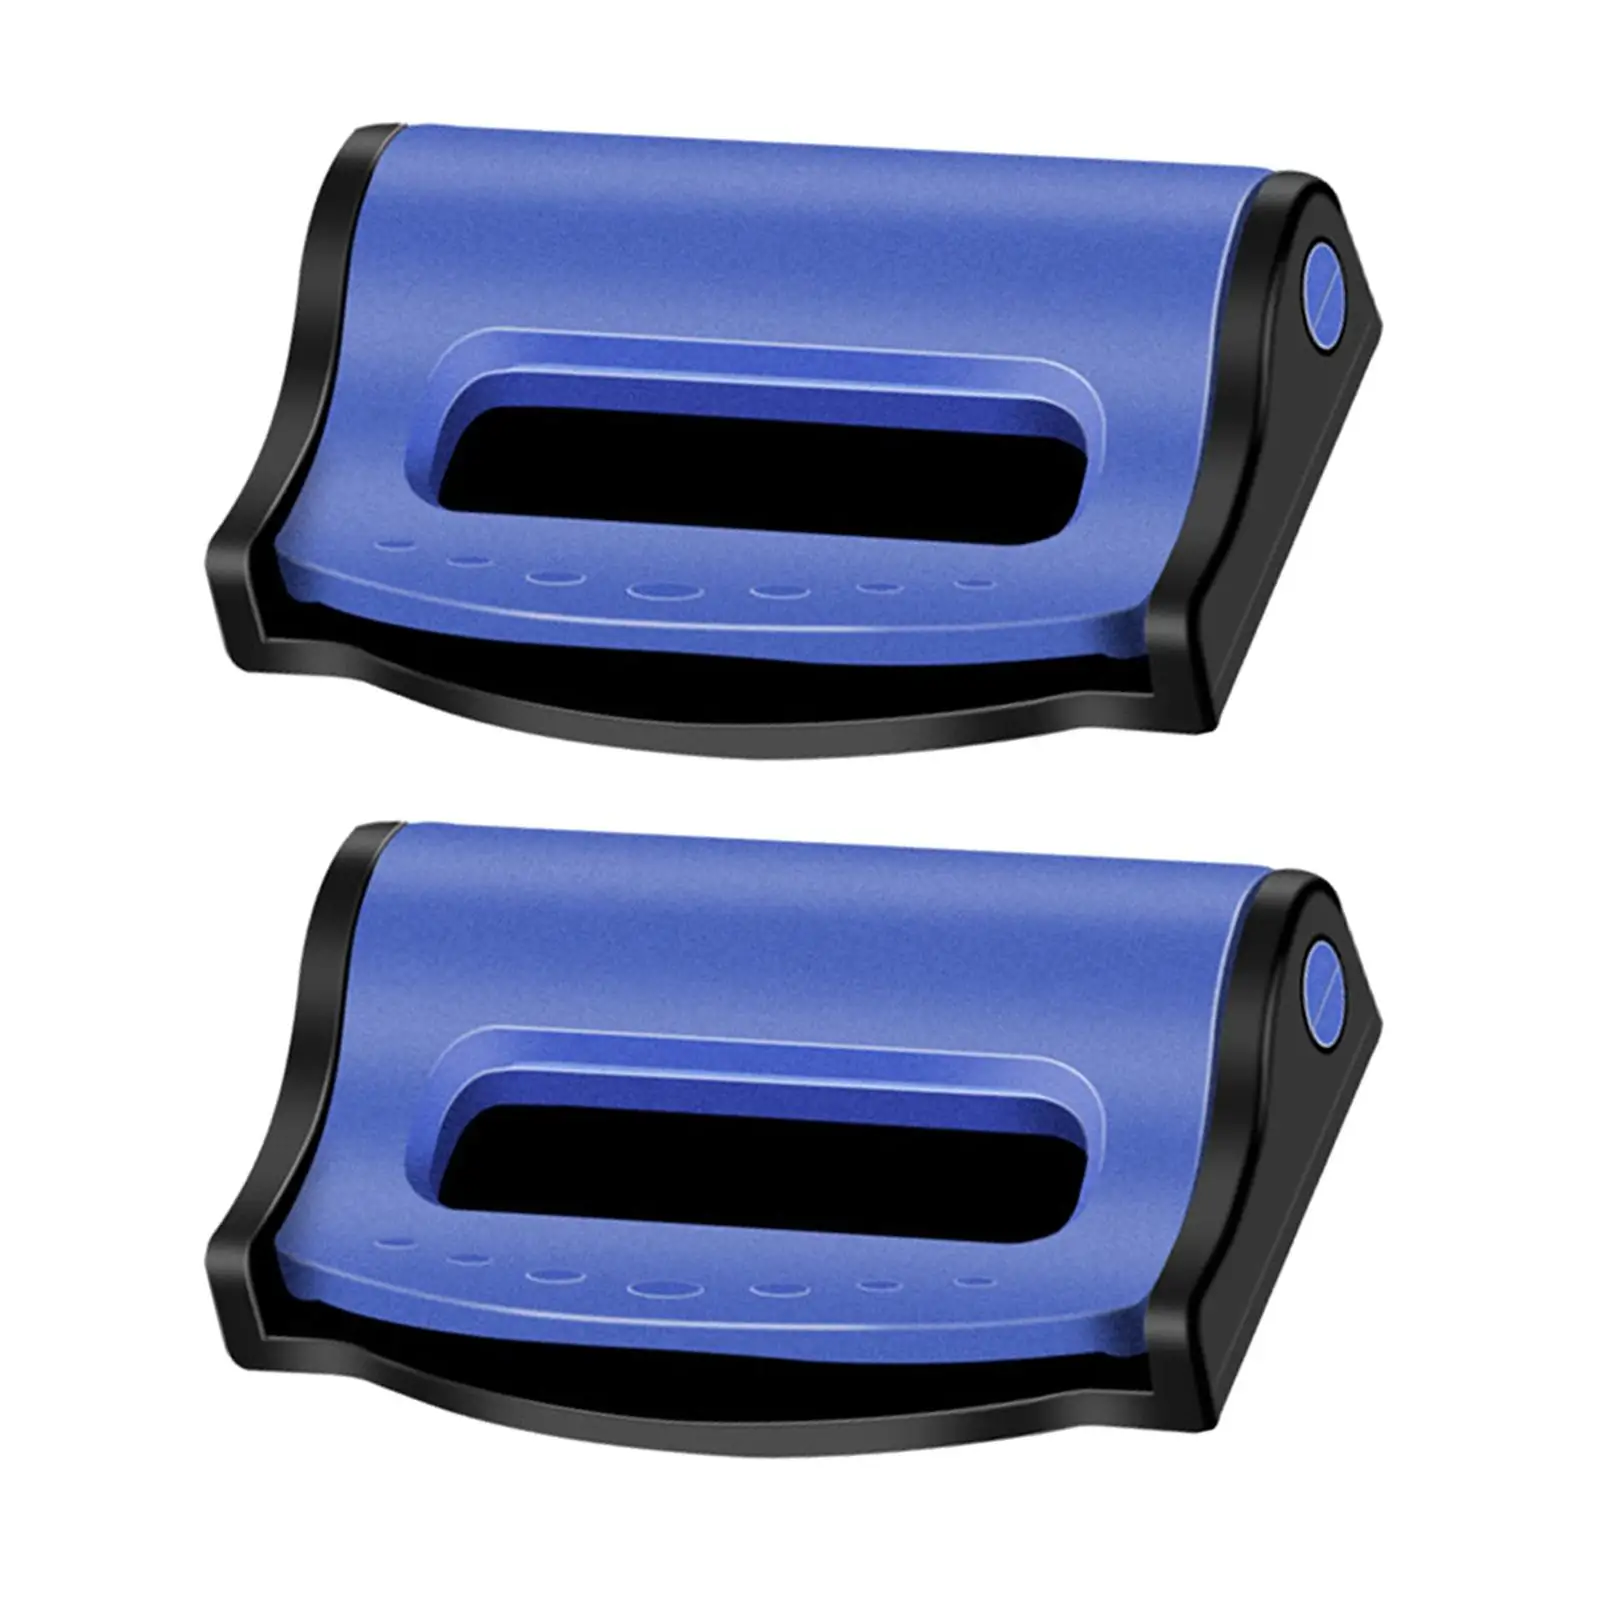 2x Car Vehicle belt Clips belt Adjuster Comfortable Wear Resistant Strap Clips Durable Easy Installation Professional